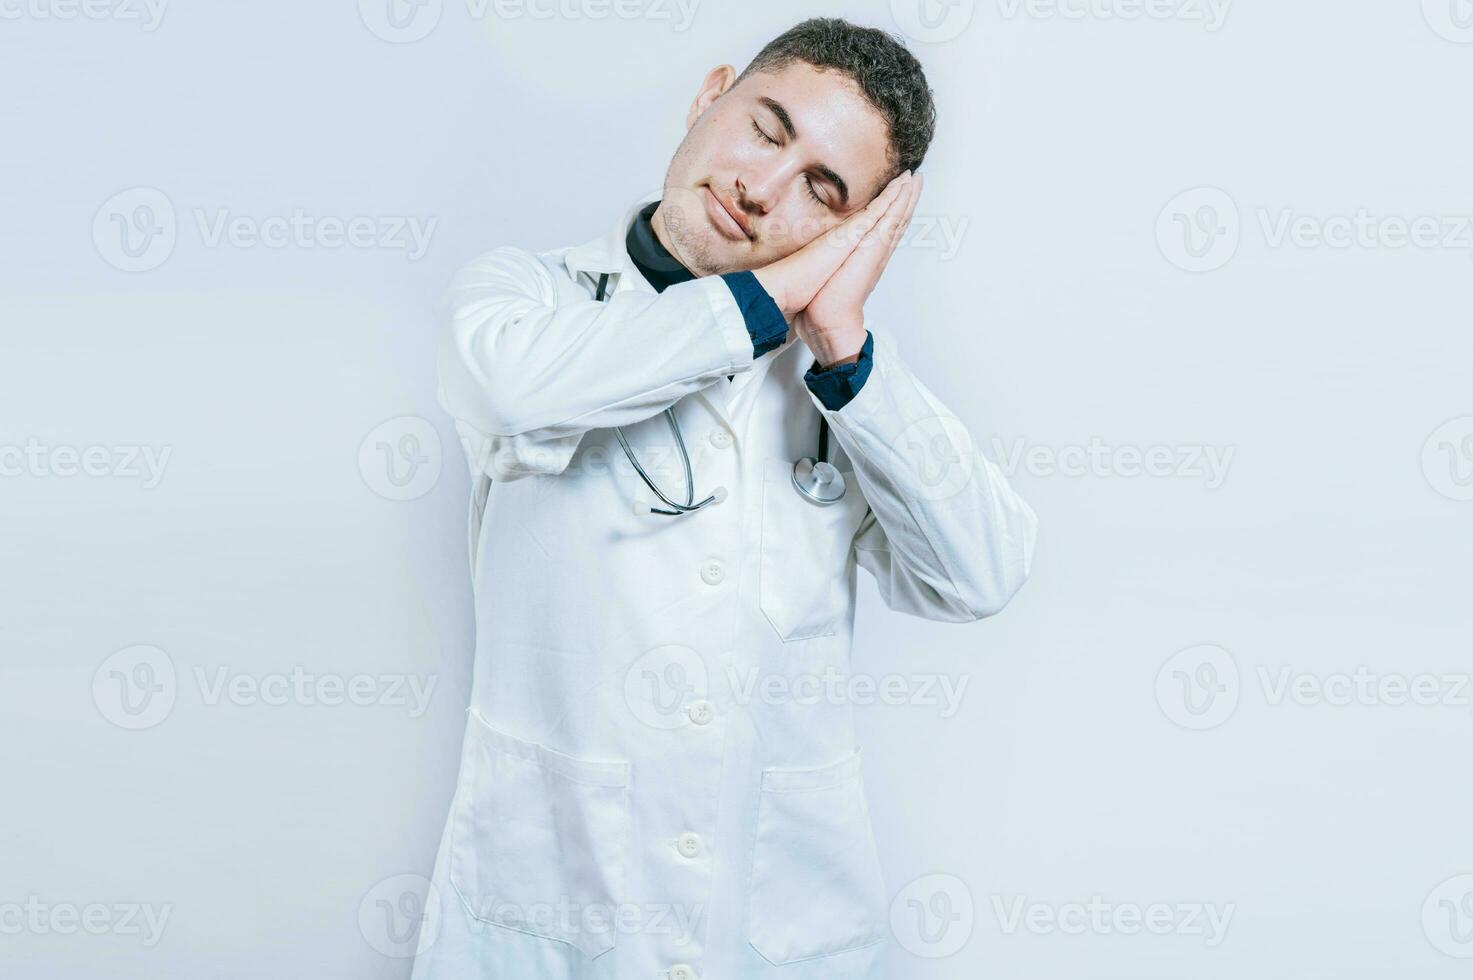 jovem médico fazer dormir gesto isolado. bonito médico fazer dormir gesto com Palmeiras em dele bochechas foto